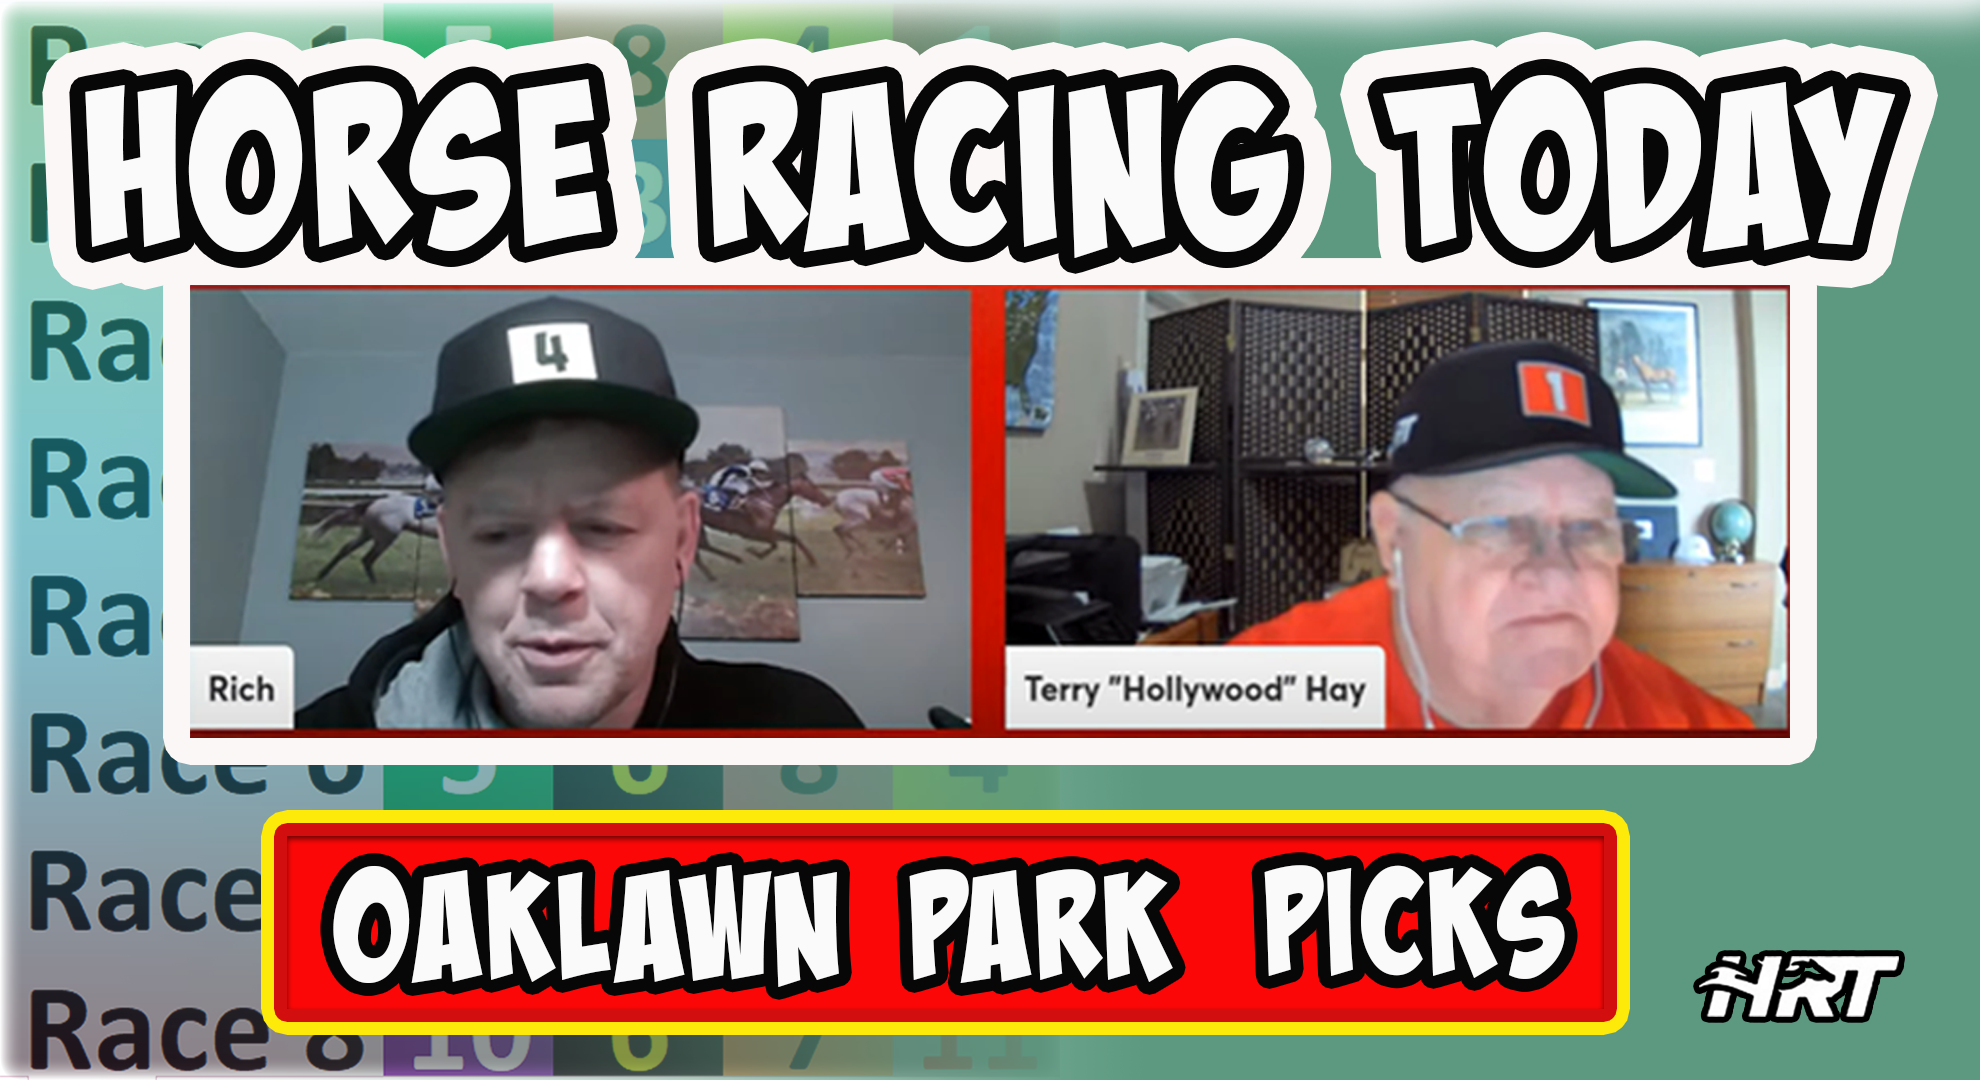 Oaklawn Park Horse Racing Picks